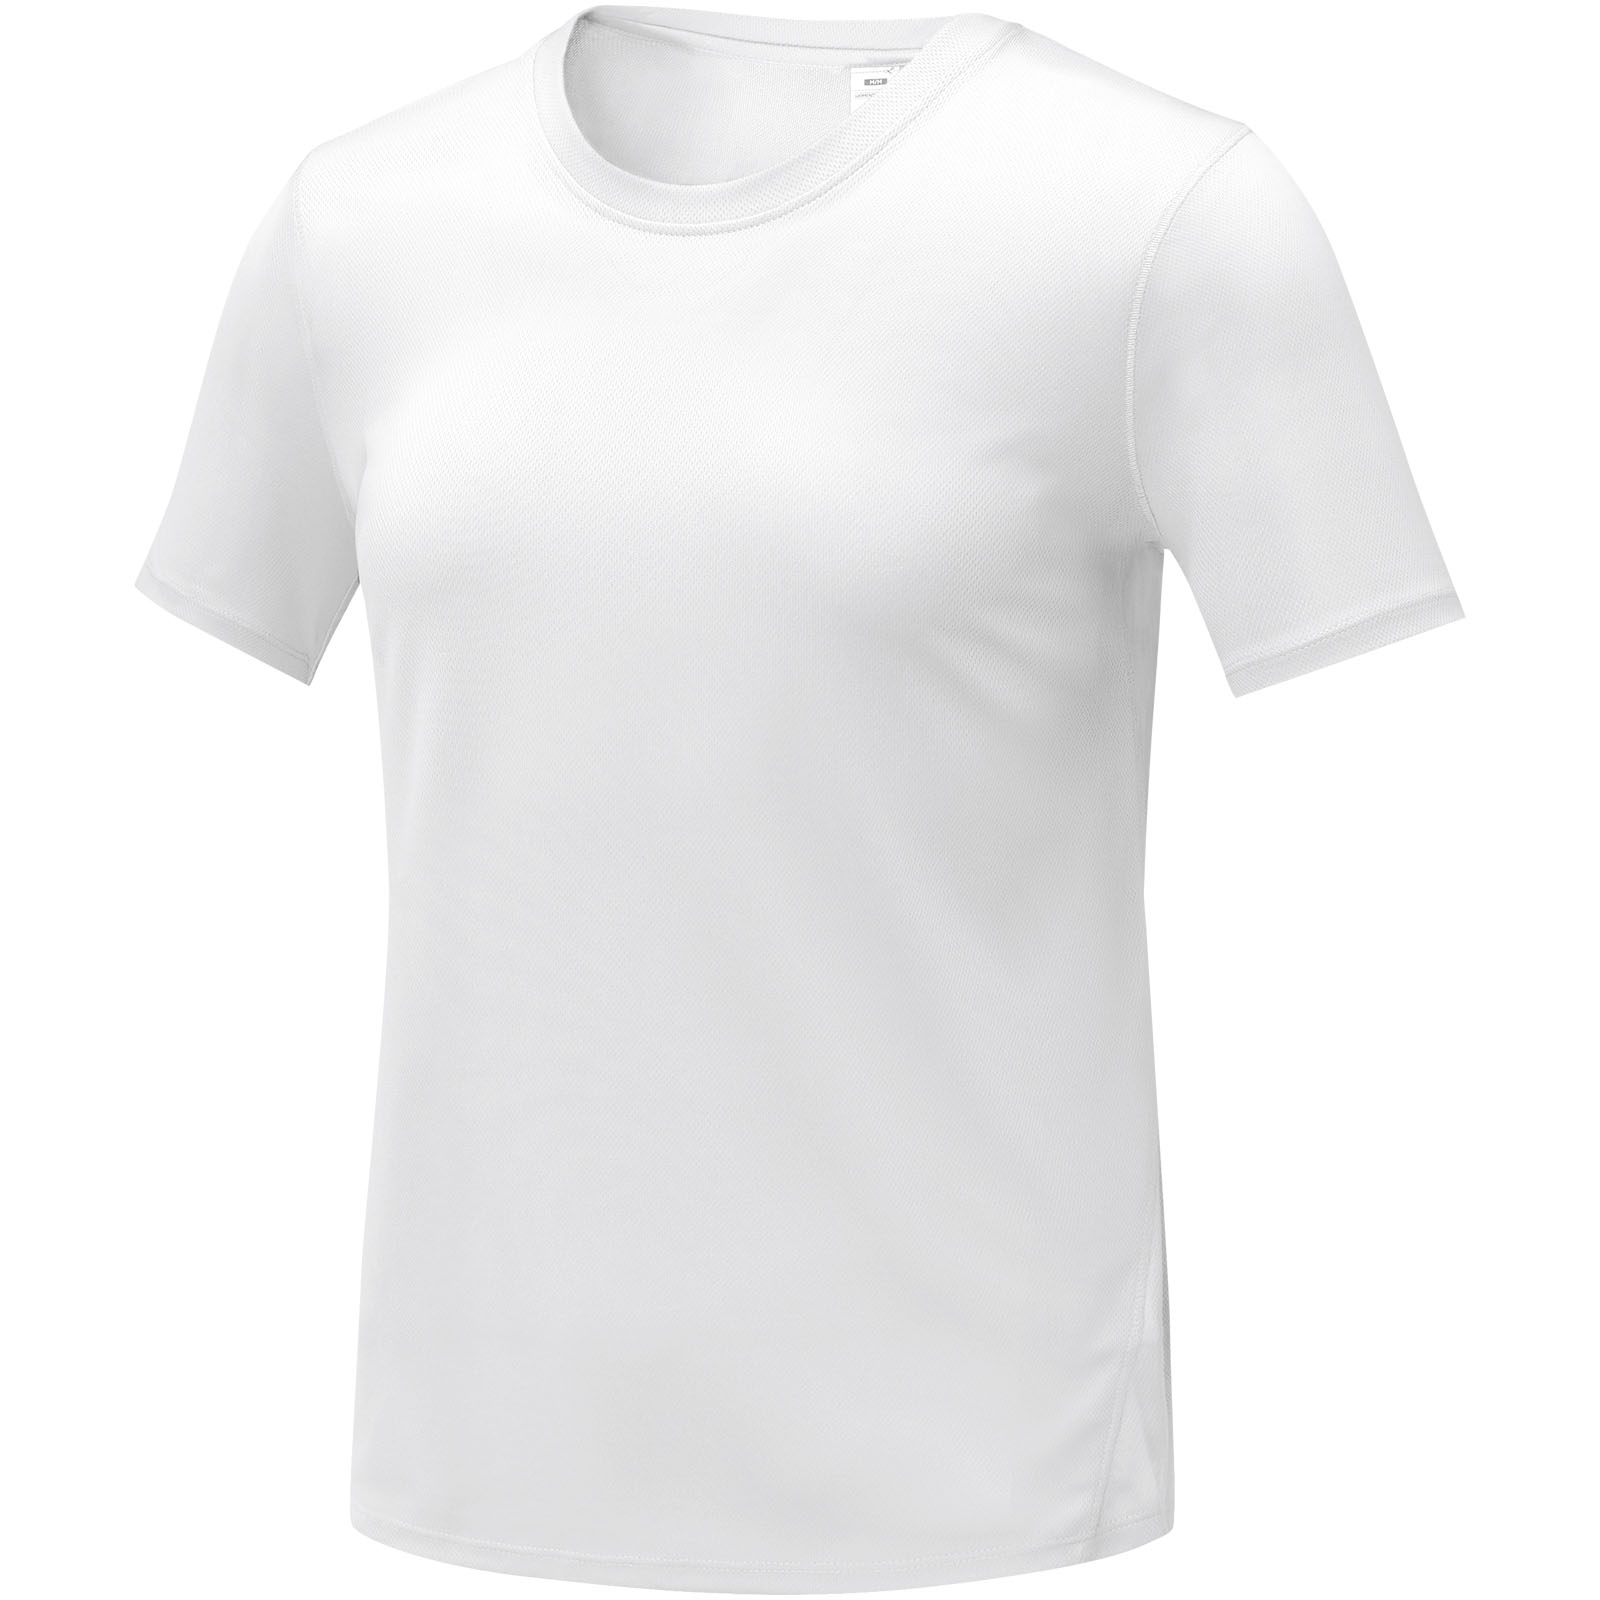 Kratos T-shirt da donna a maniche corte Cool Fit - Boffalora sopra Ticino